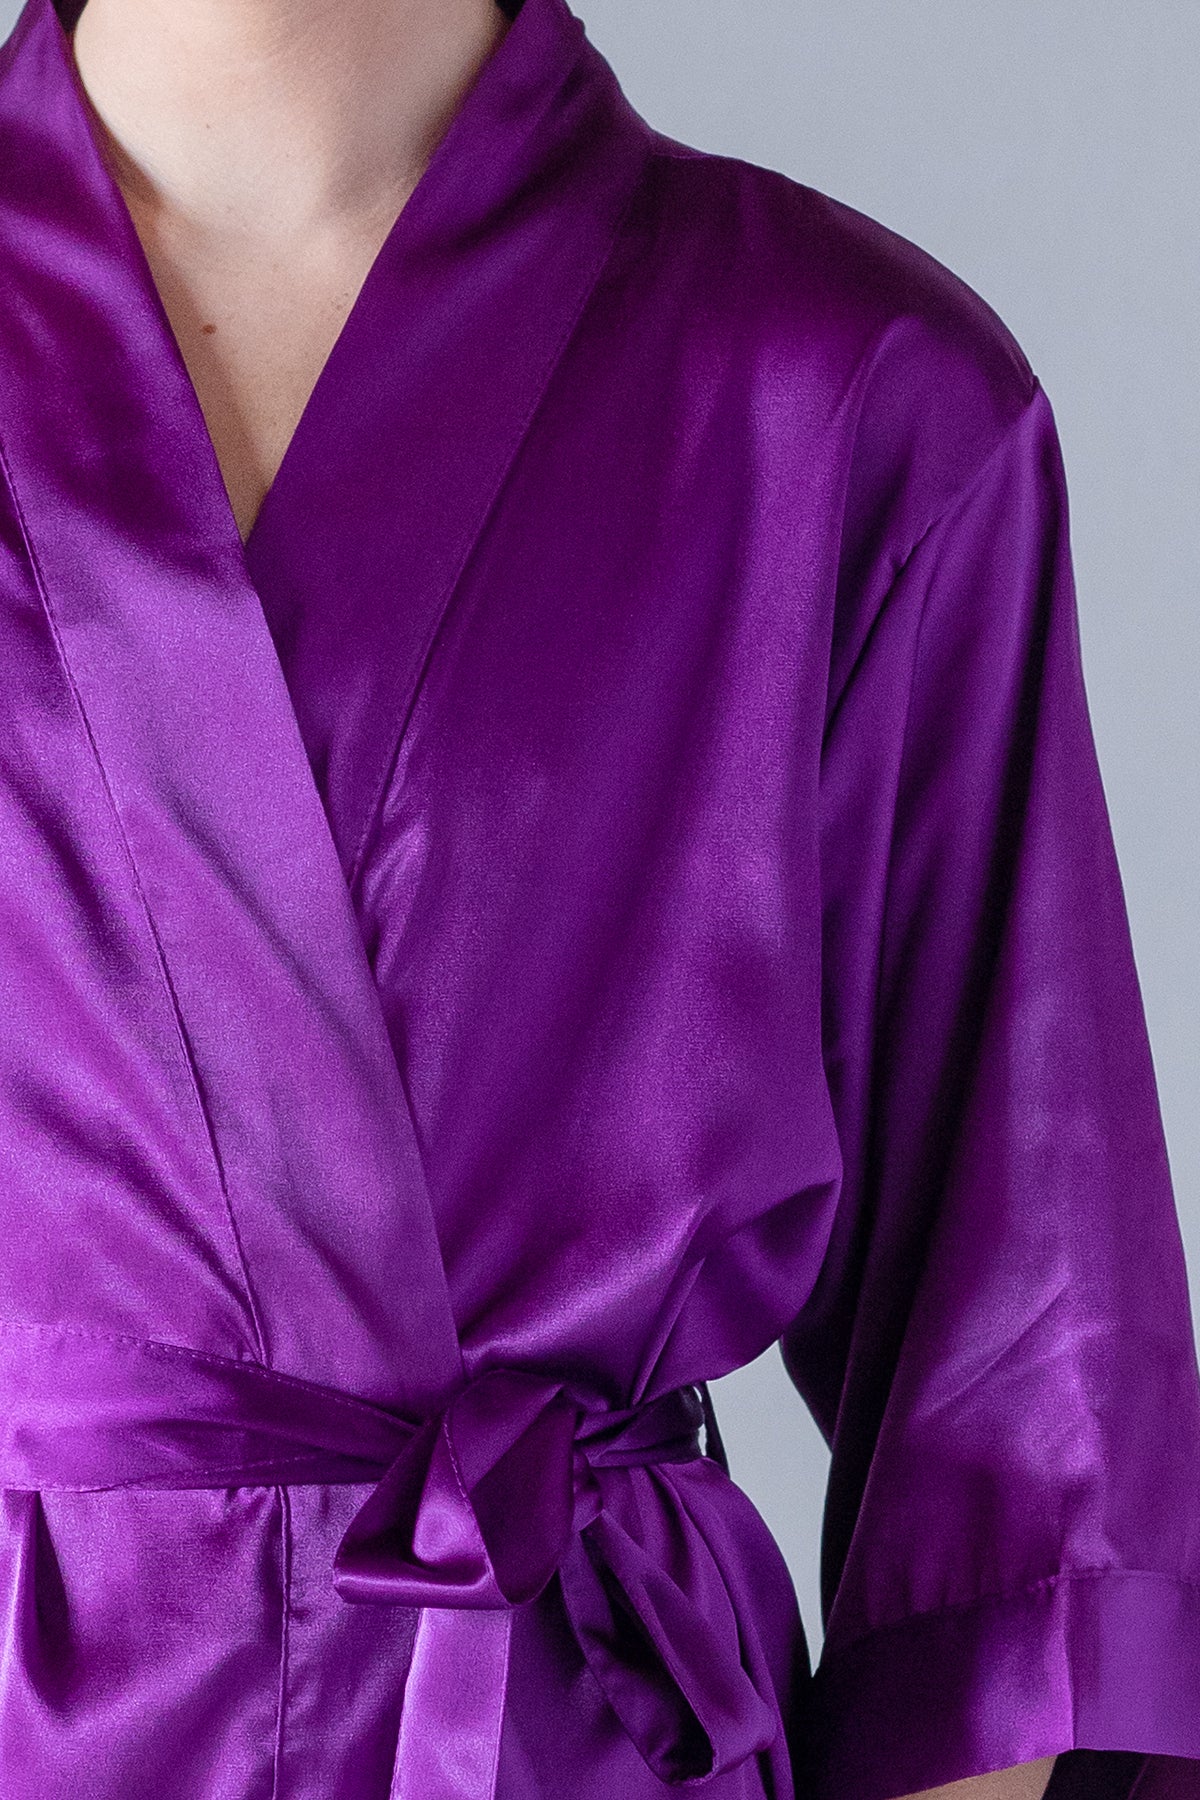 Egg Plant Satin Kimono Robe Close Up - Purple Bridal Robe - Bridal Robe - Bridesmaid Robe - Purple Robe - PrettyRobes